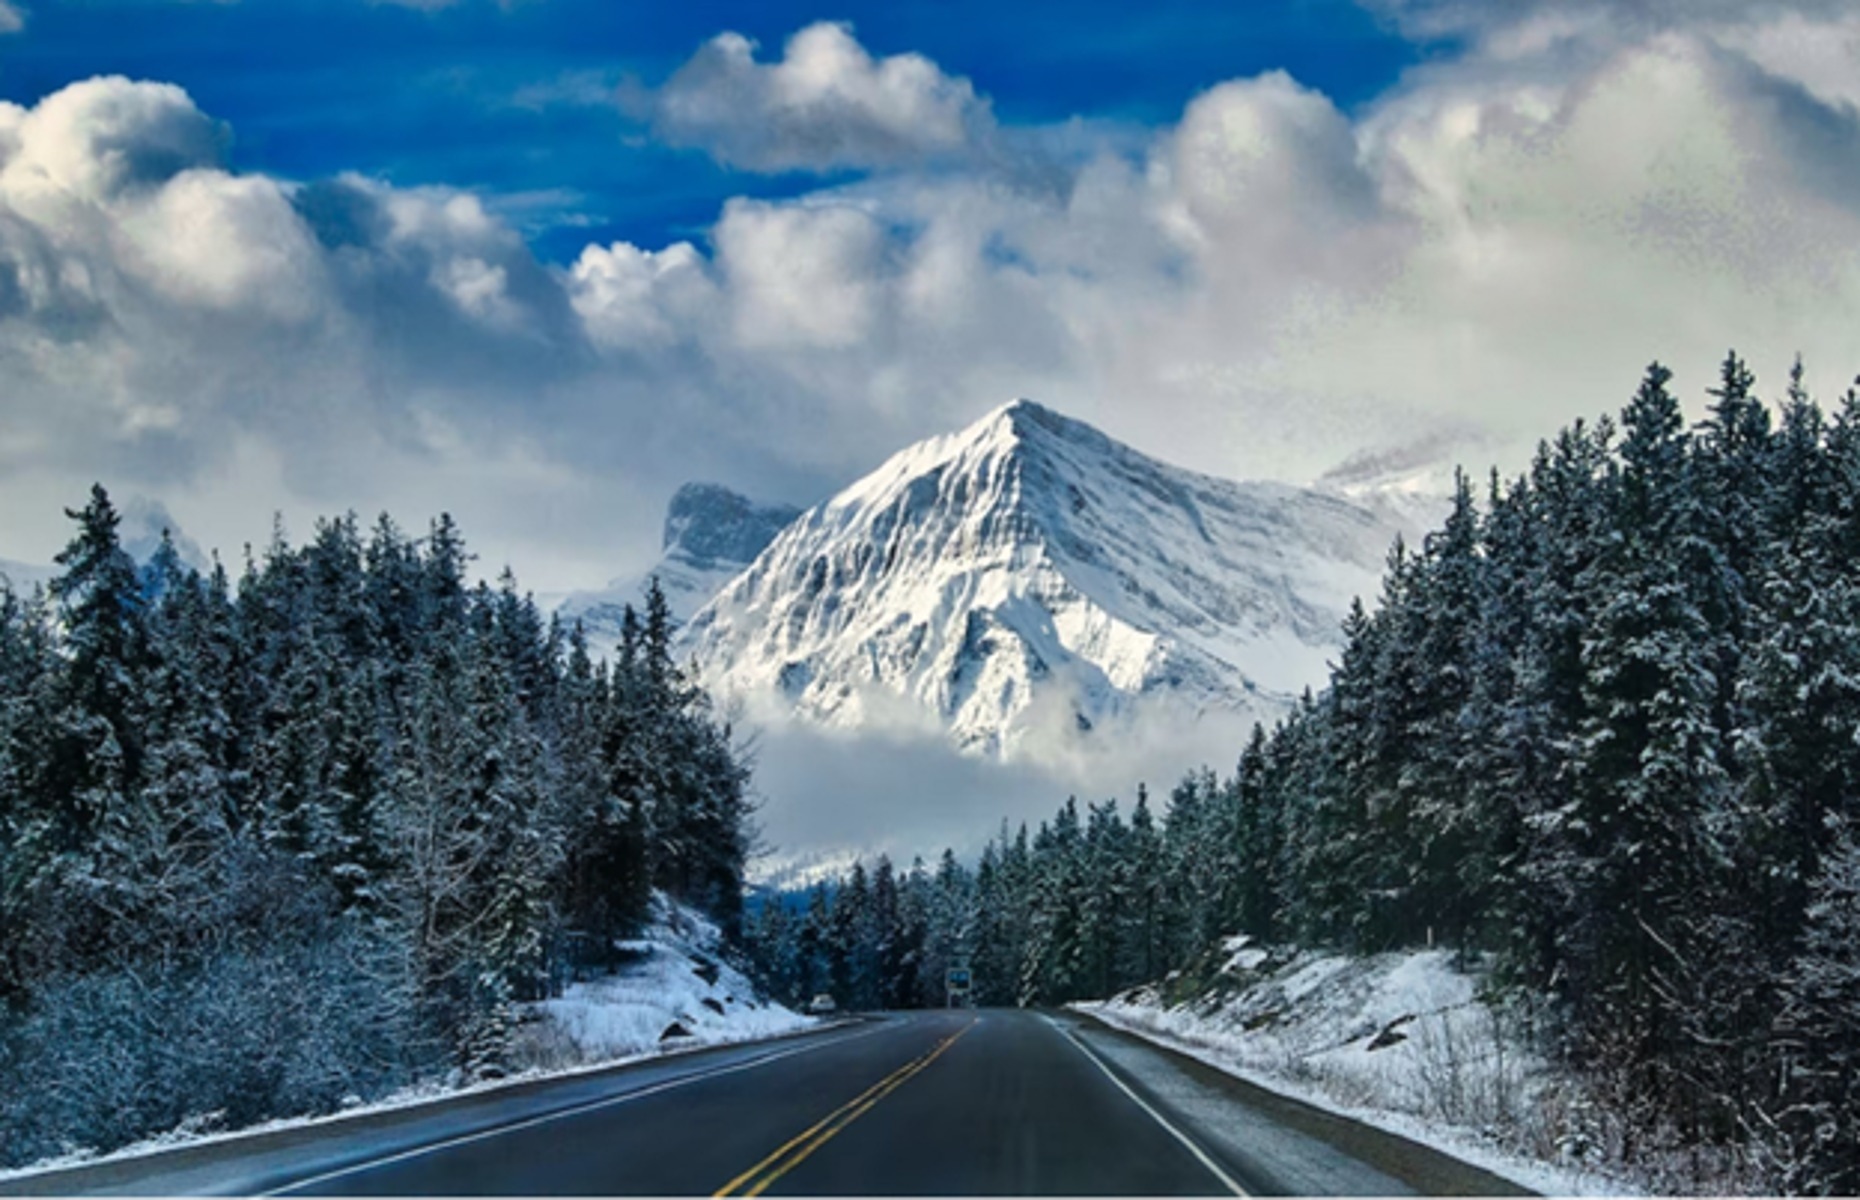 Alberta National Park (Image: Photo by Floris Siegers on Unsplash)